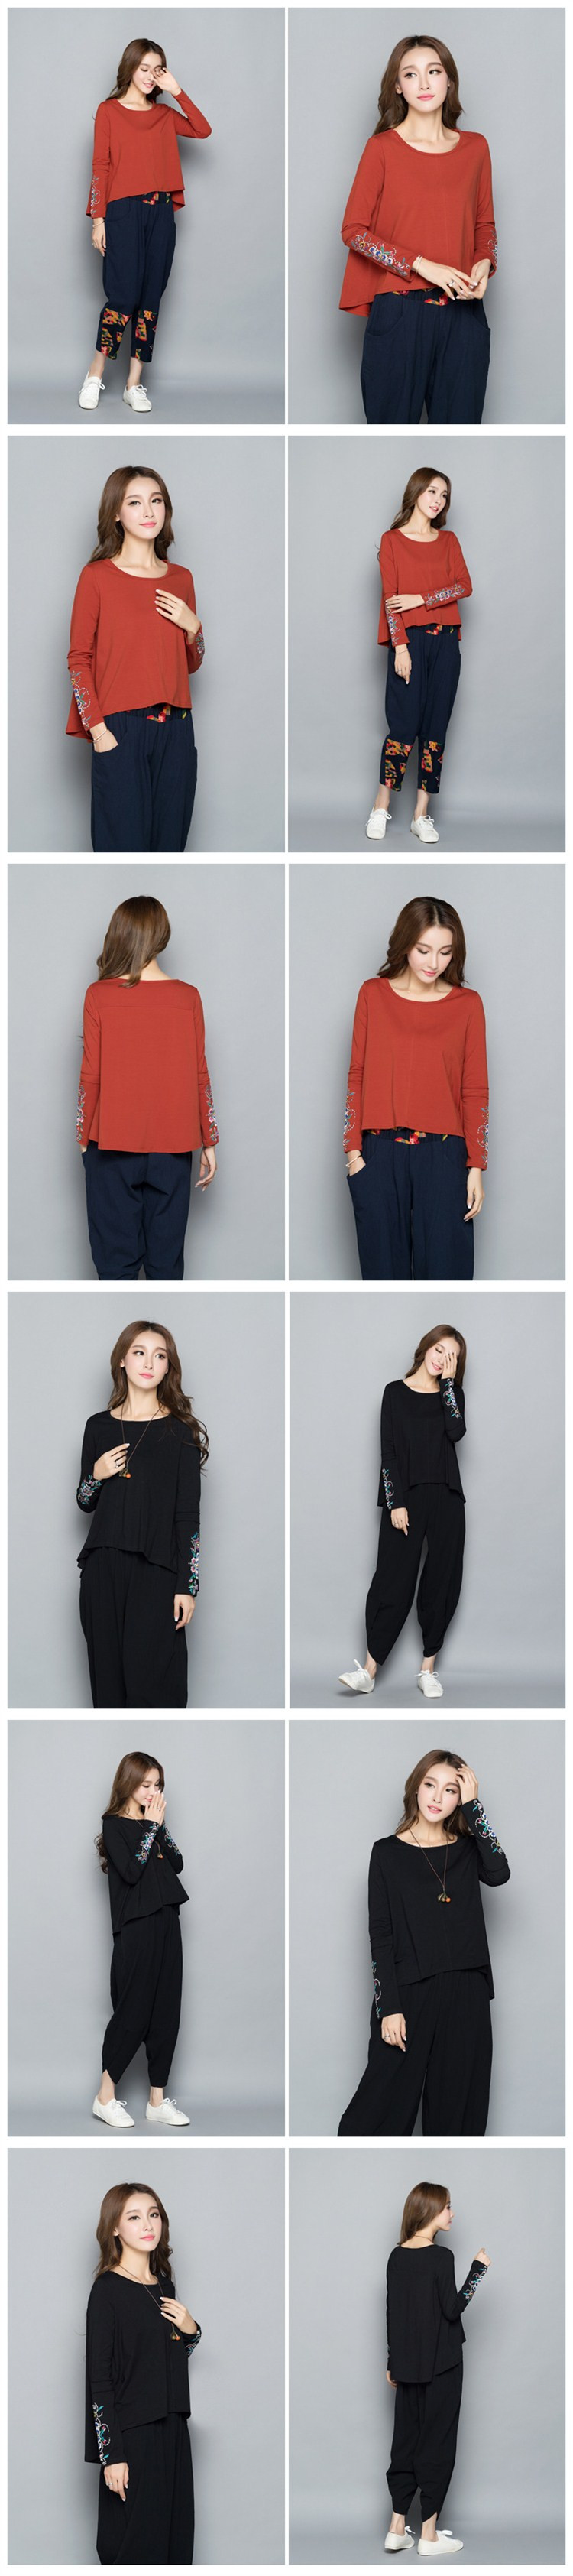 Autumn-Women-Embroidery-Round-Neck-Long-Sleeve-T-Shirt-1194706